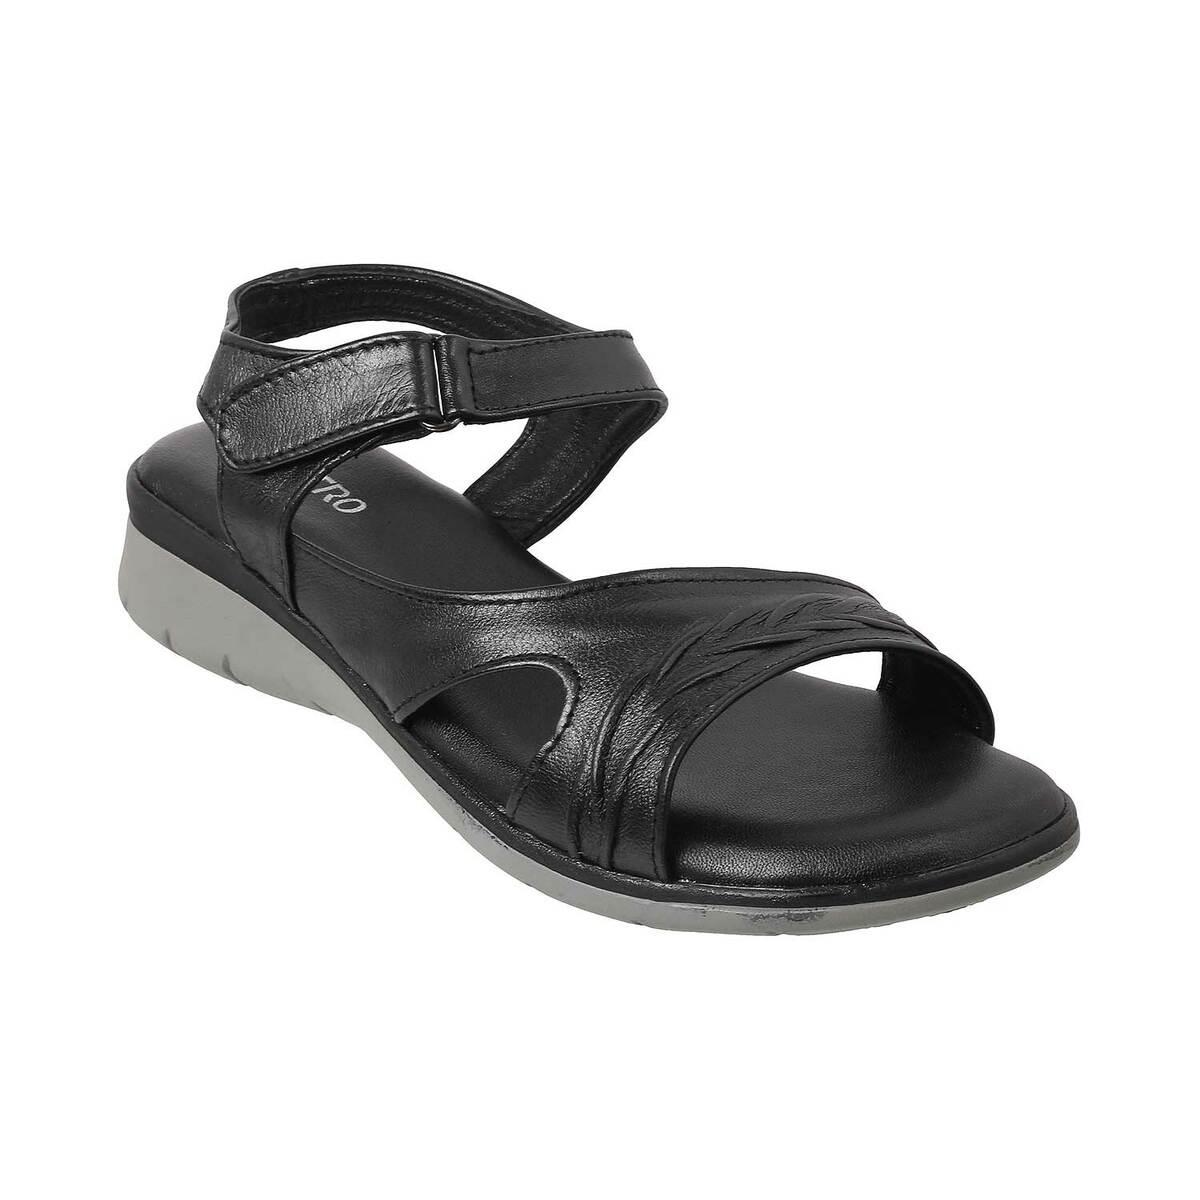 Buy Black Flip Flop & Slippers for Women by Metro Online